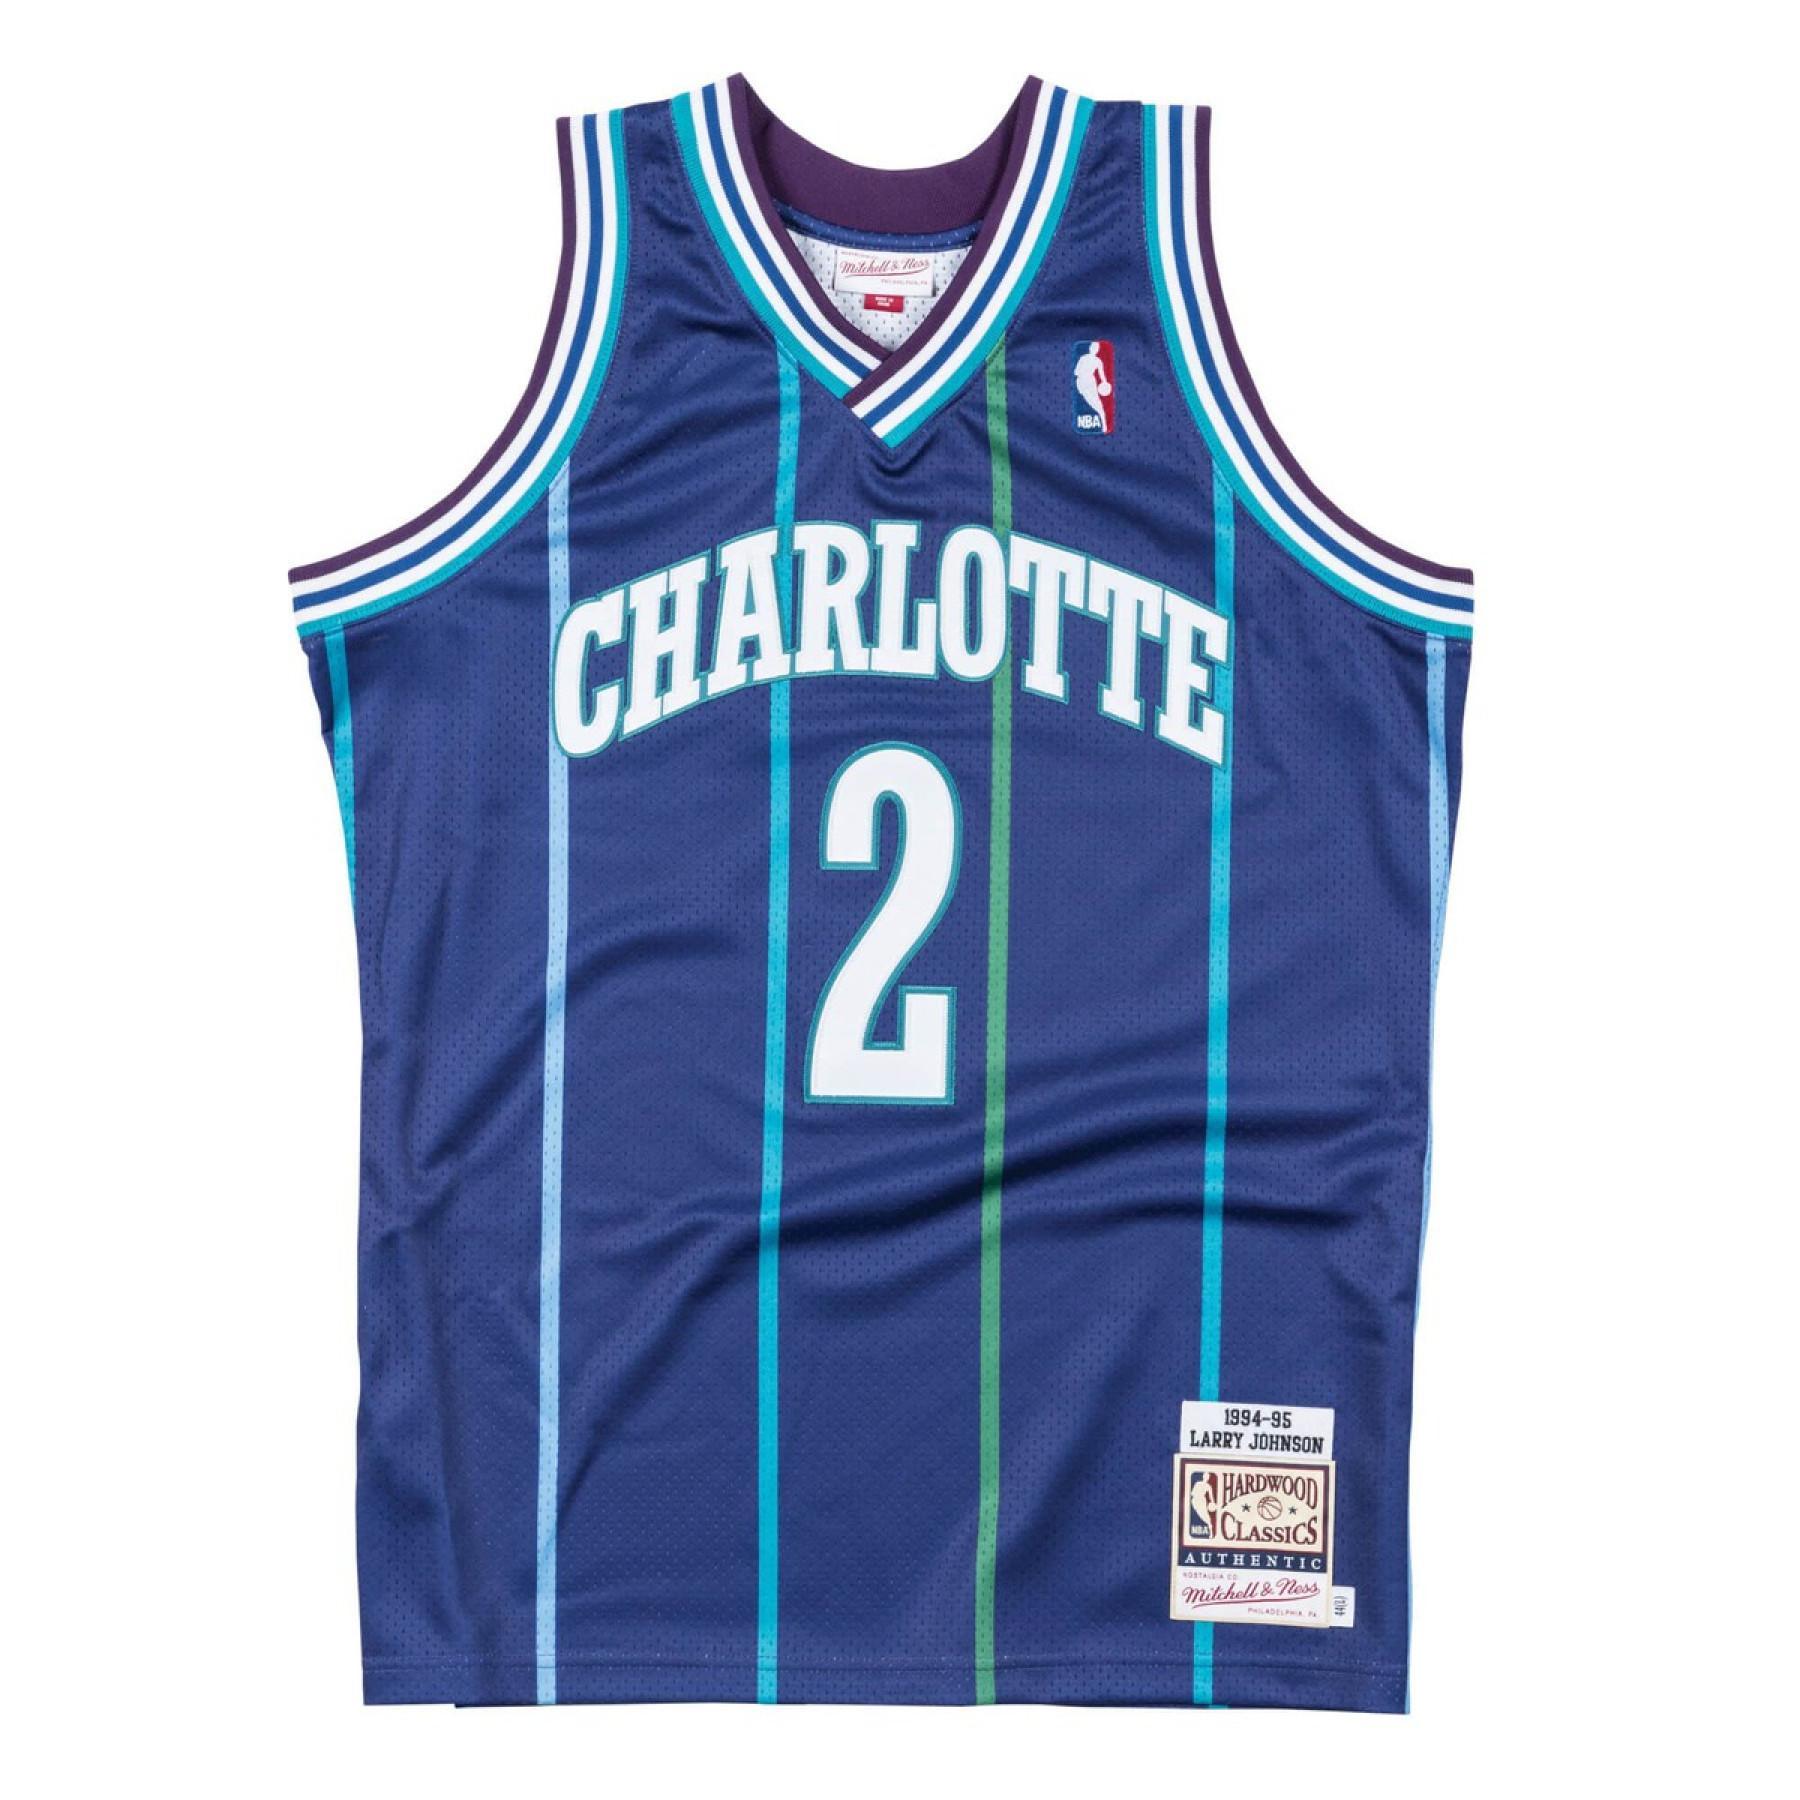 Autentyczna koszulka Charlotte Hornets Larry Johnson 1994/95